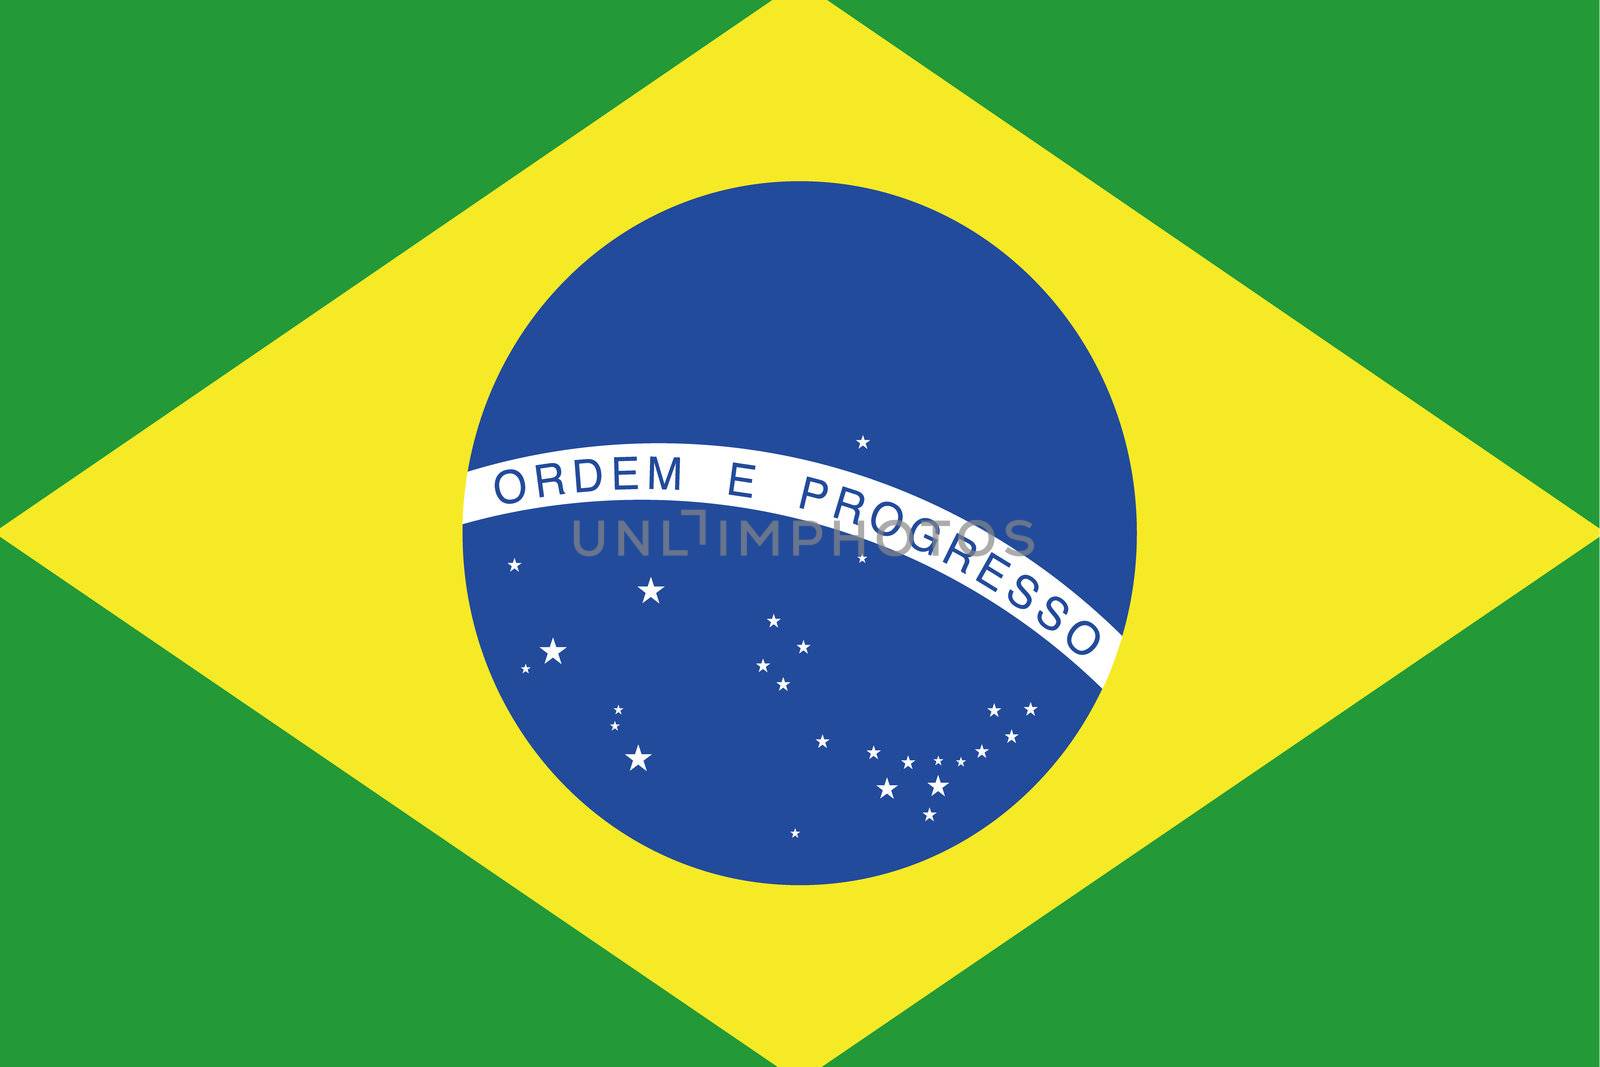 An illustration of the flag of Brazil